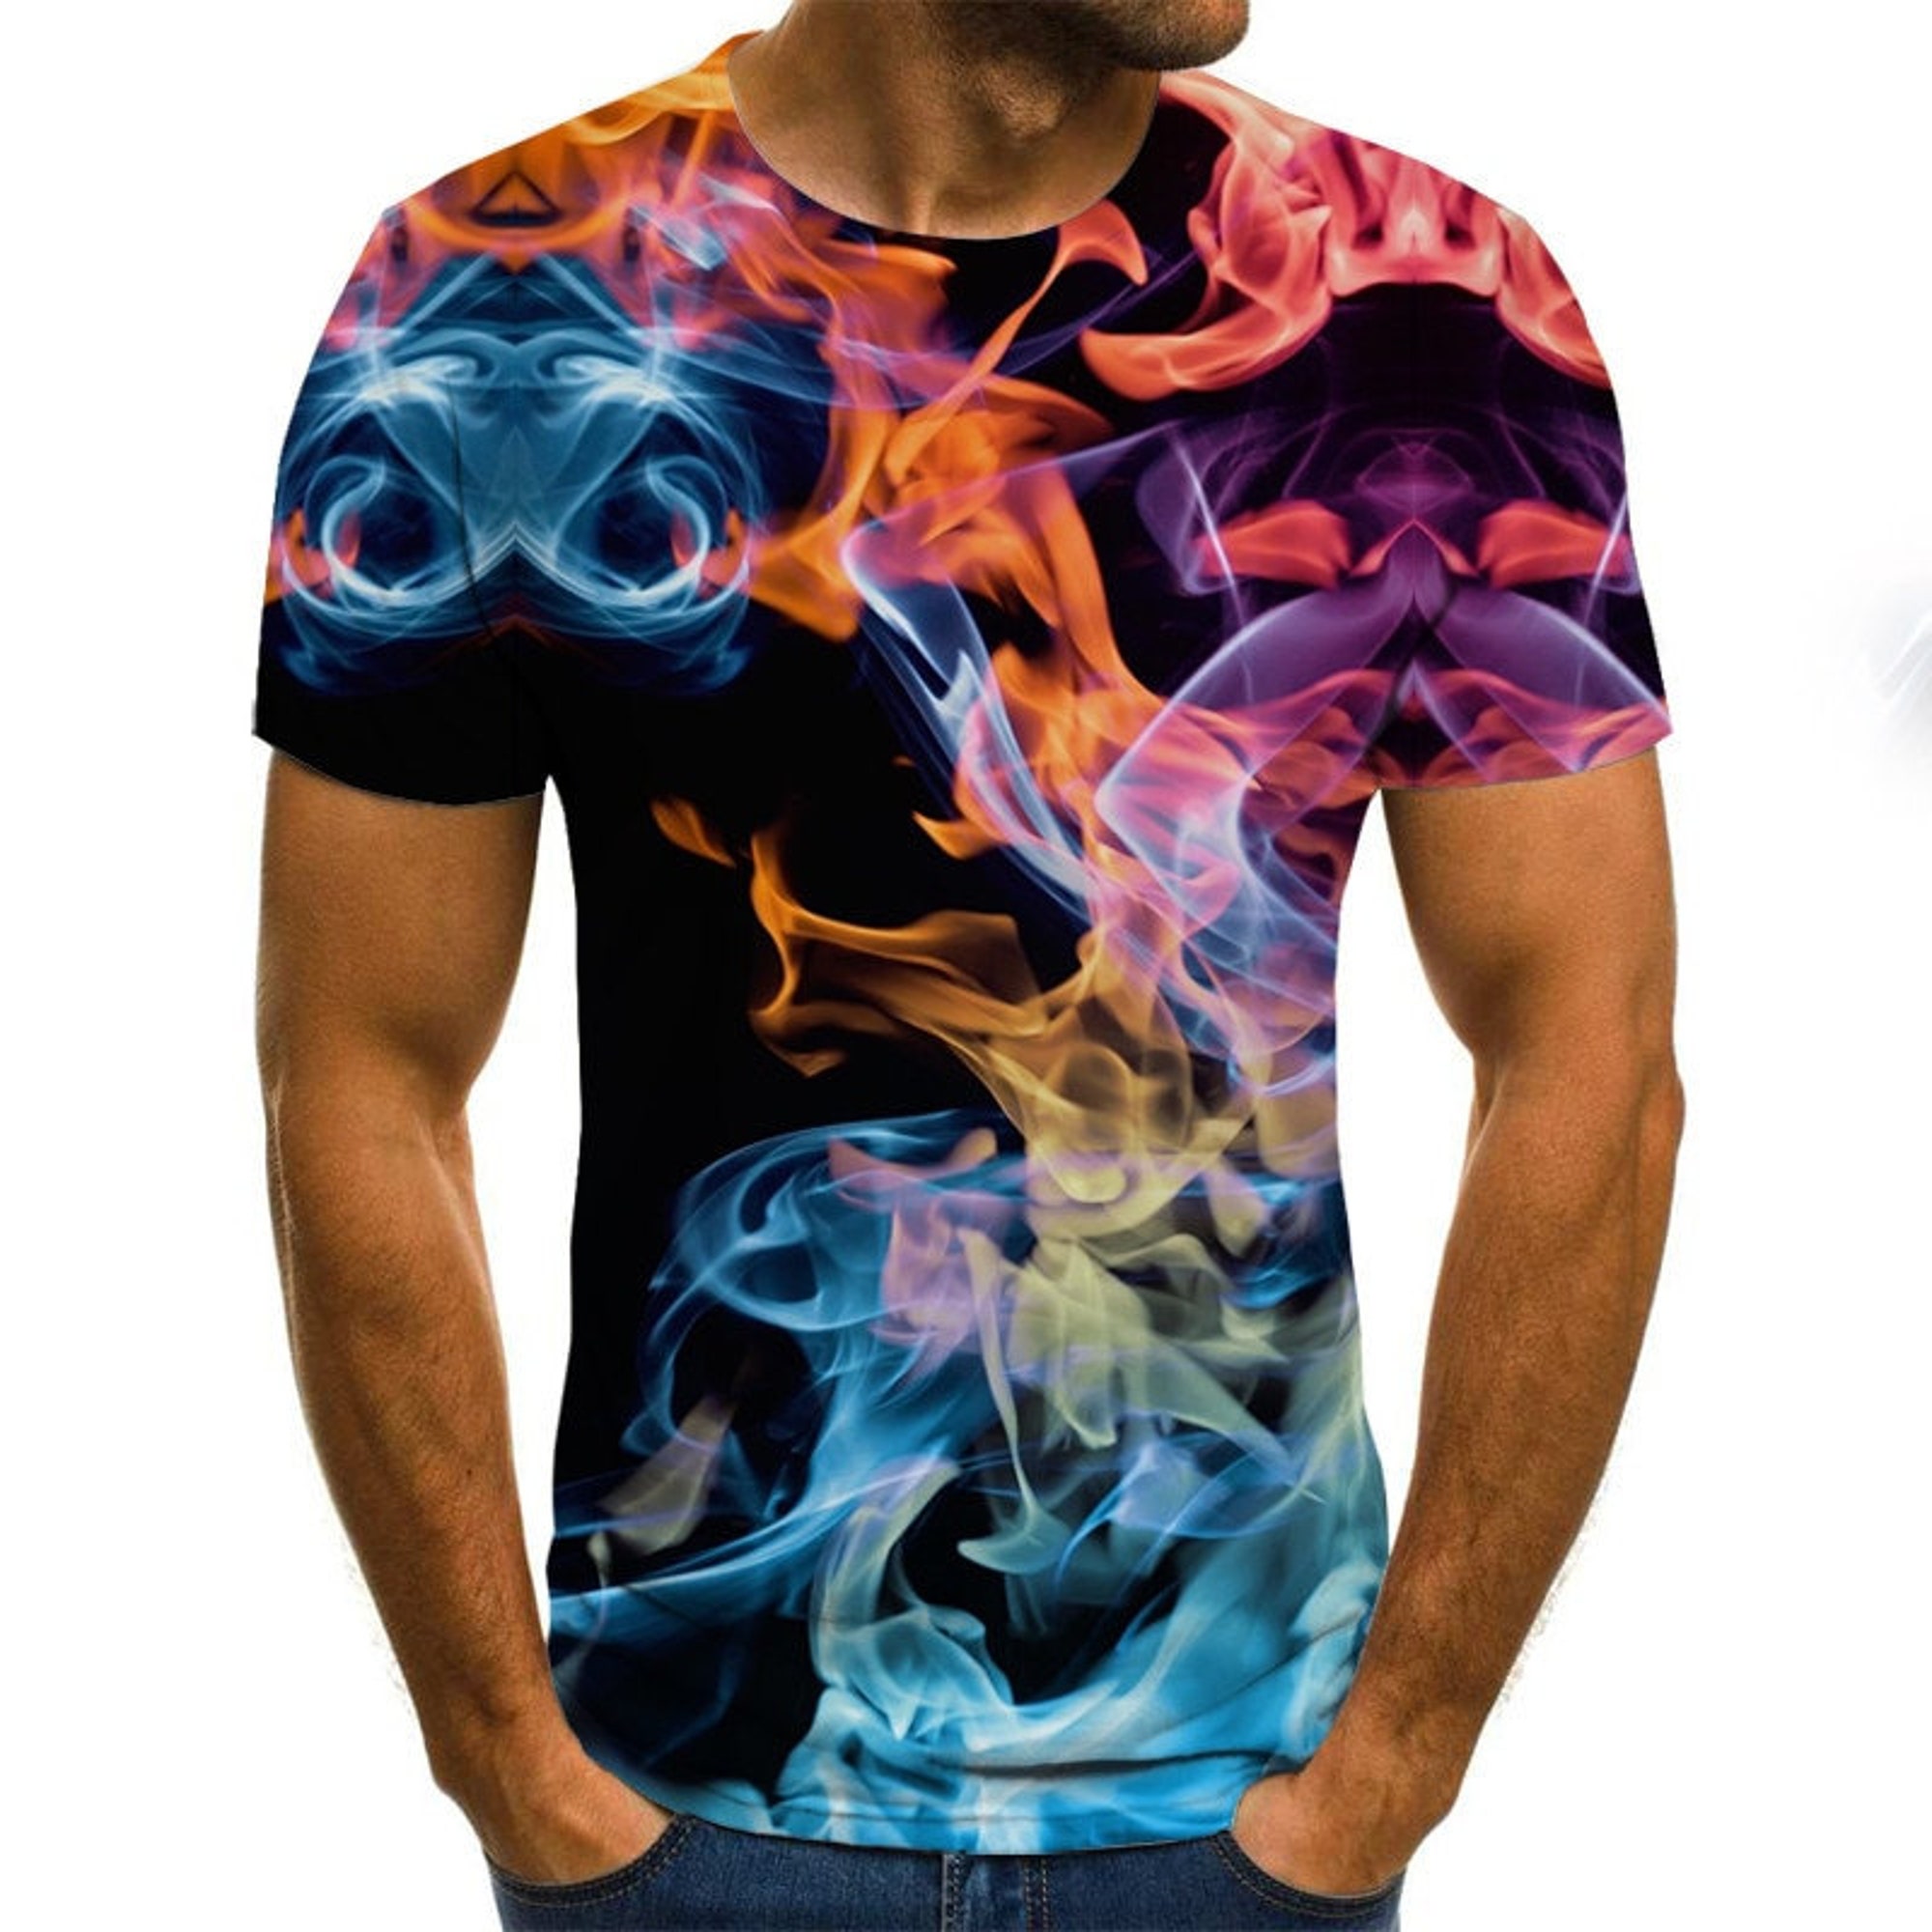 Colorful smoke shirt new T-shirt summer cool shirts